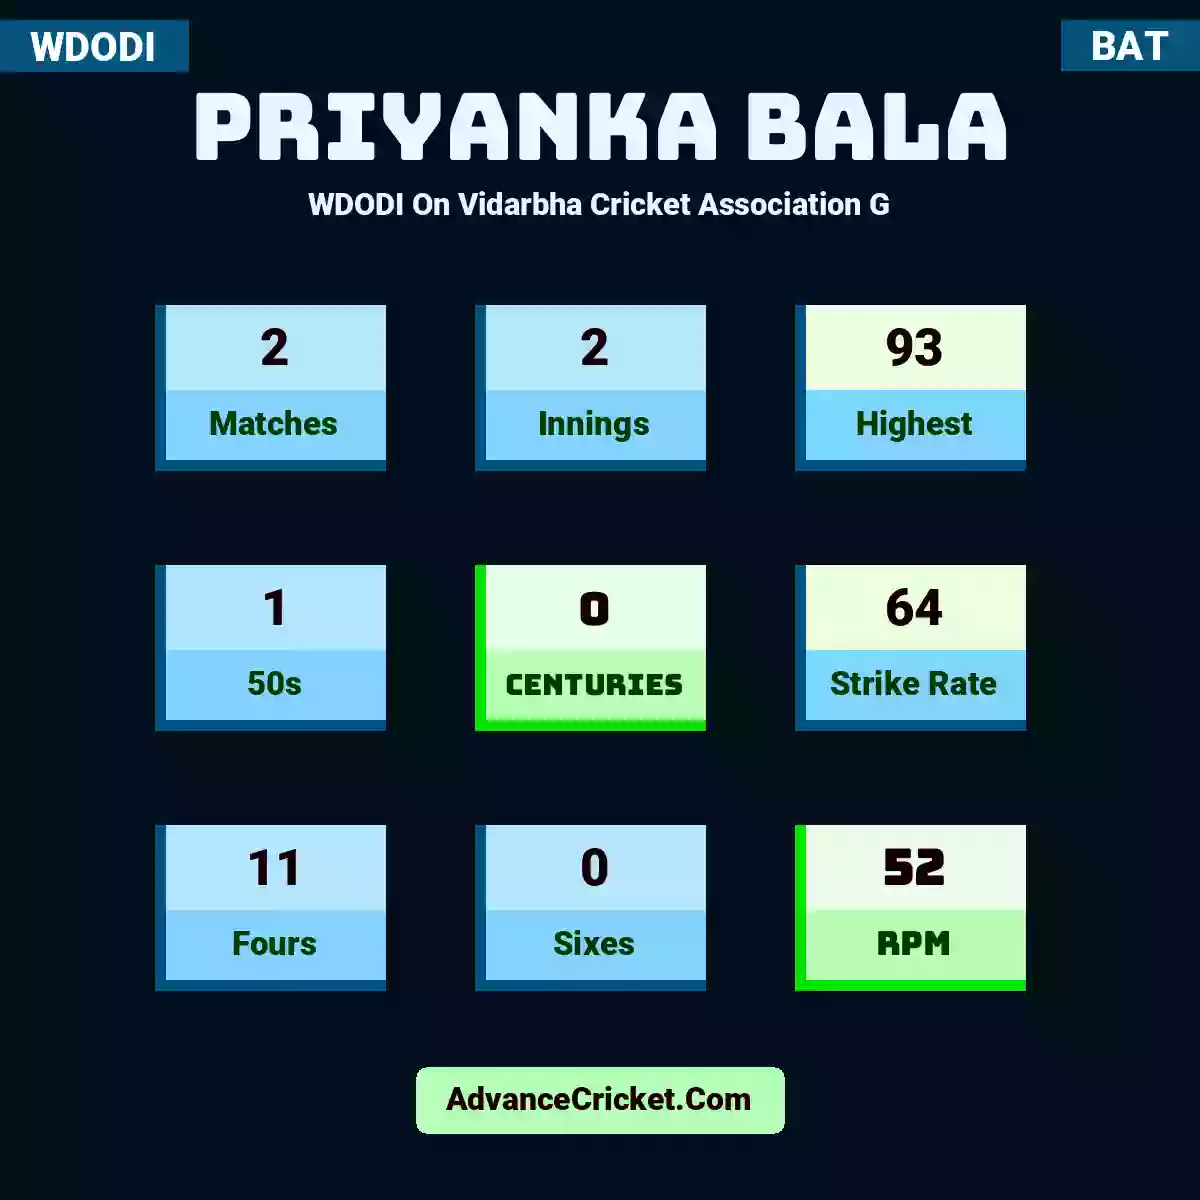 Priyanka Bala WDODI  On Vidarbha Cricket Association G, Priyanka Bala played 2 matches, scored 93 runs as highest, 1 half-centuries, and 0 centuries, with a strike rate of 64. P.Bala hit 11 fours and 0 sixes, with an RPM of 52.